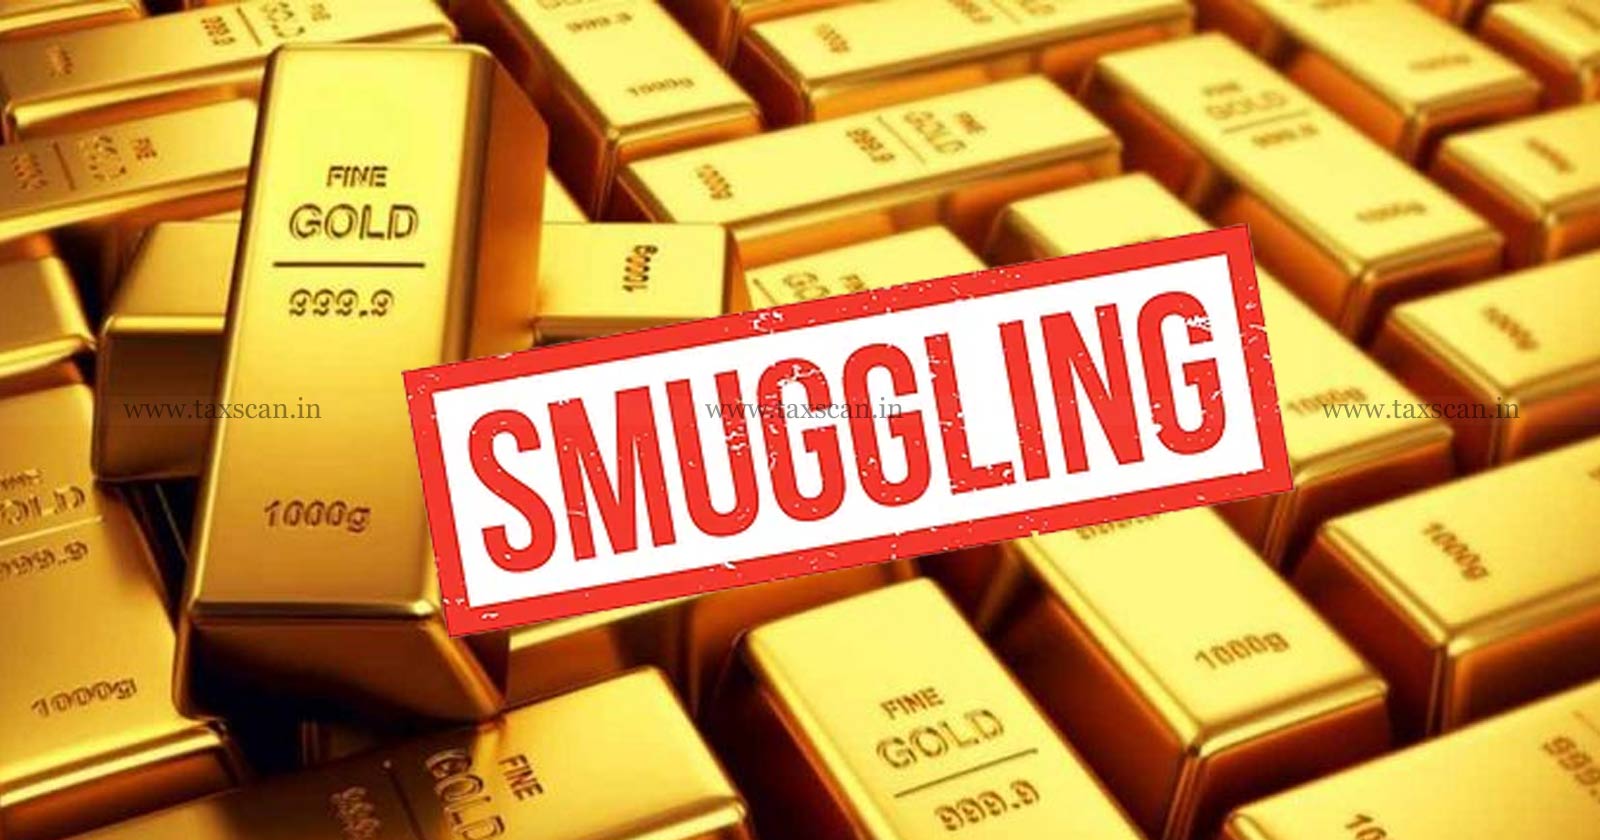 Multi-City Raid - Multi-City - DRI - Seizes - Smuggled Gold - Gold - taxscan